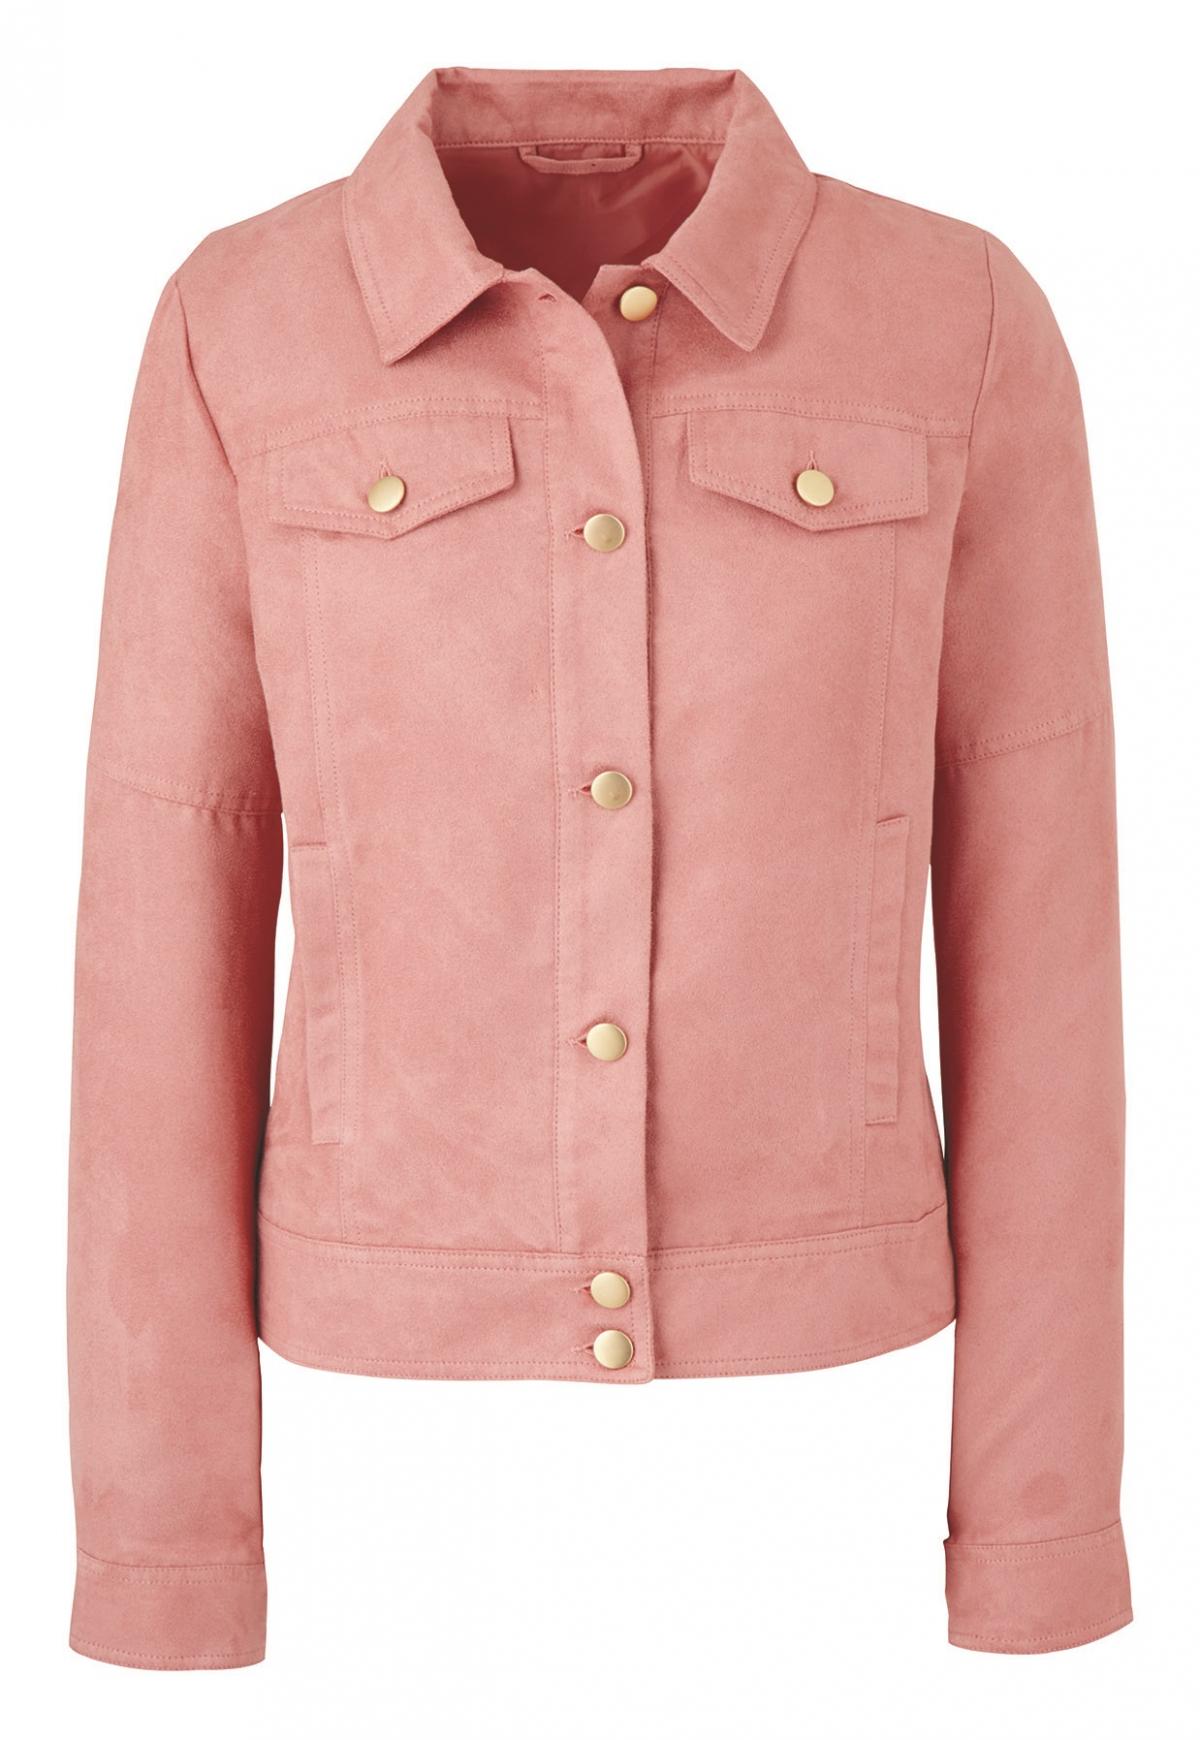 JD Williams, Pink Western Suedette Jacket, £55